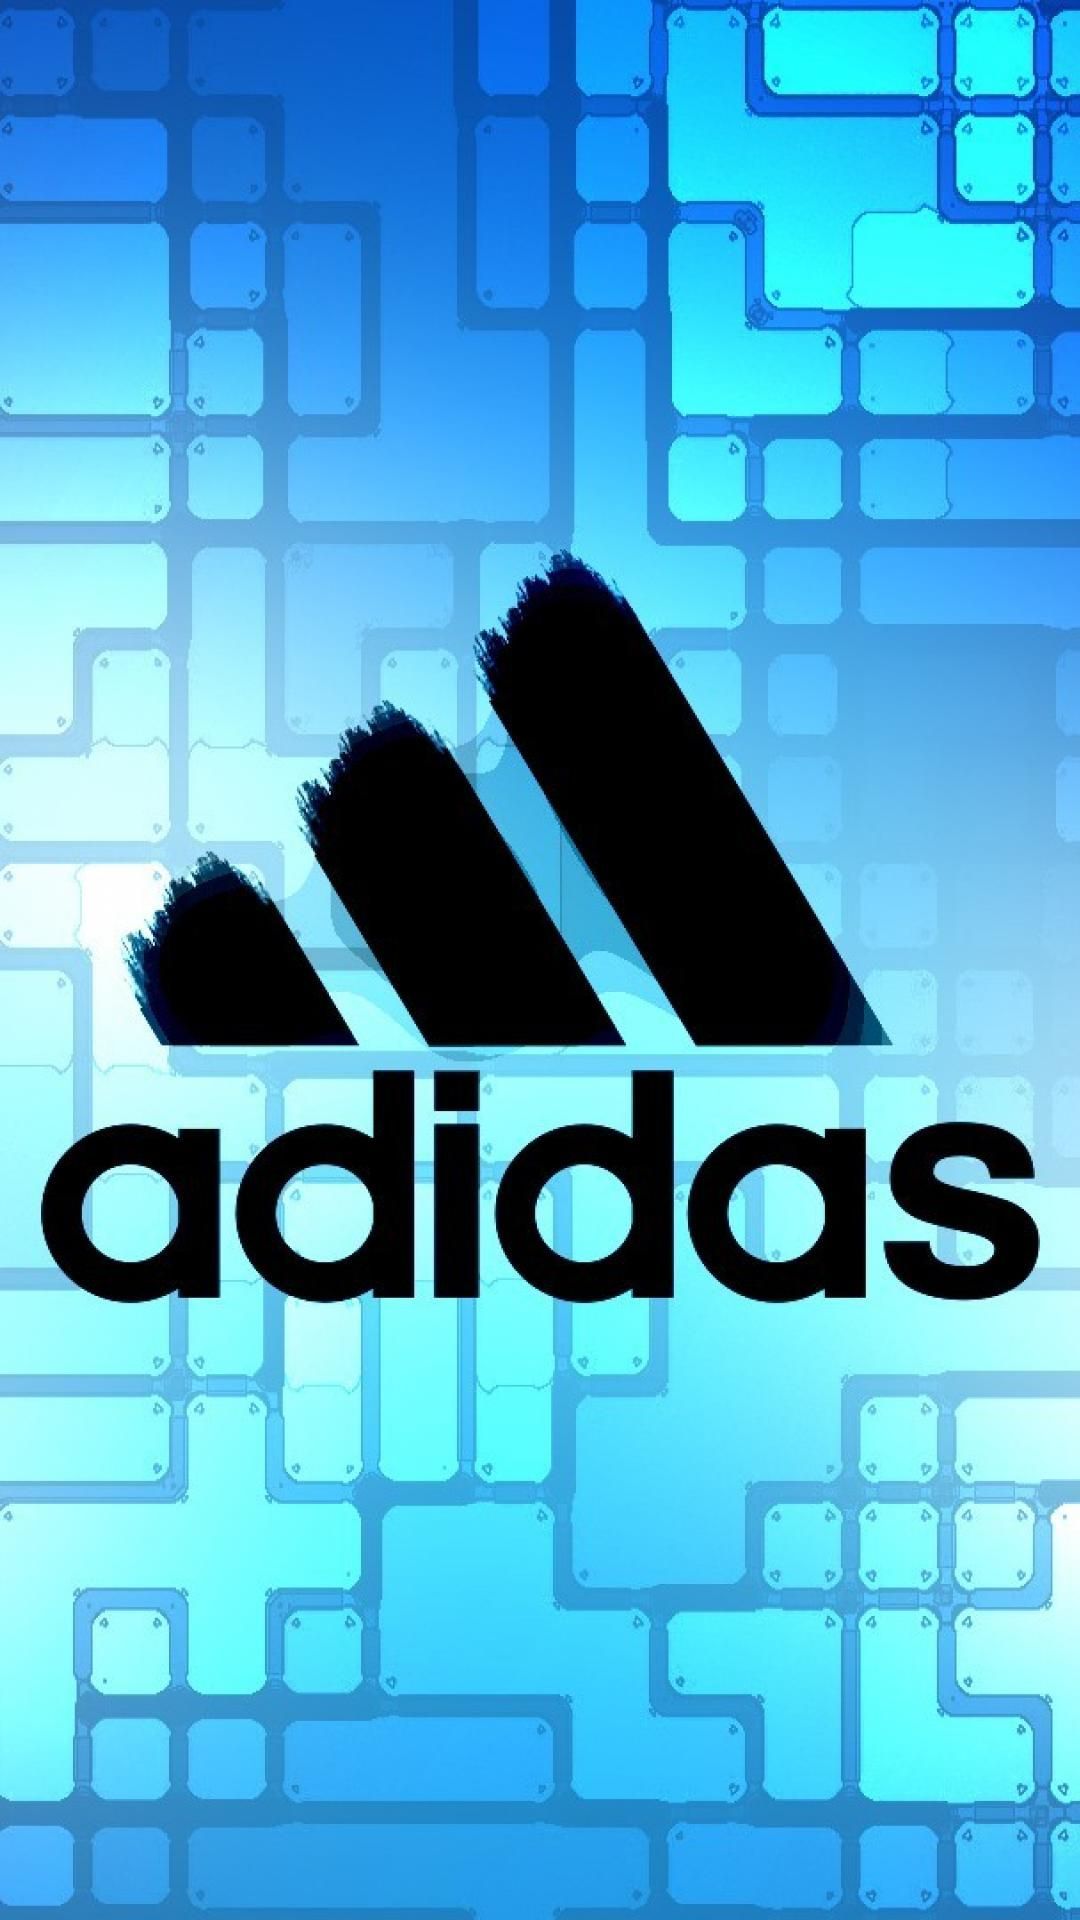 Adidas Iphone Background Download Free Pixelstalk Net